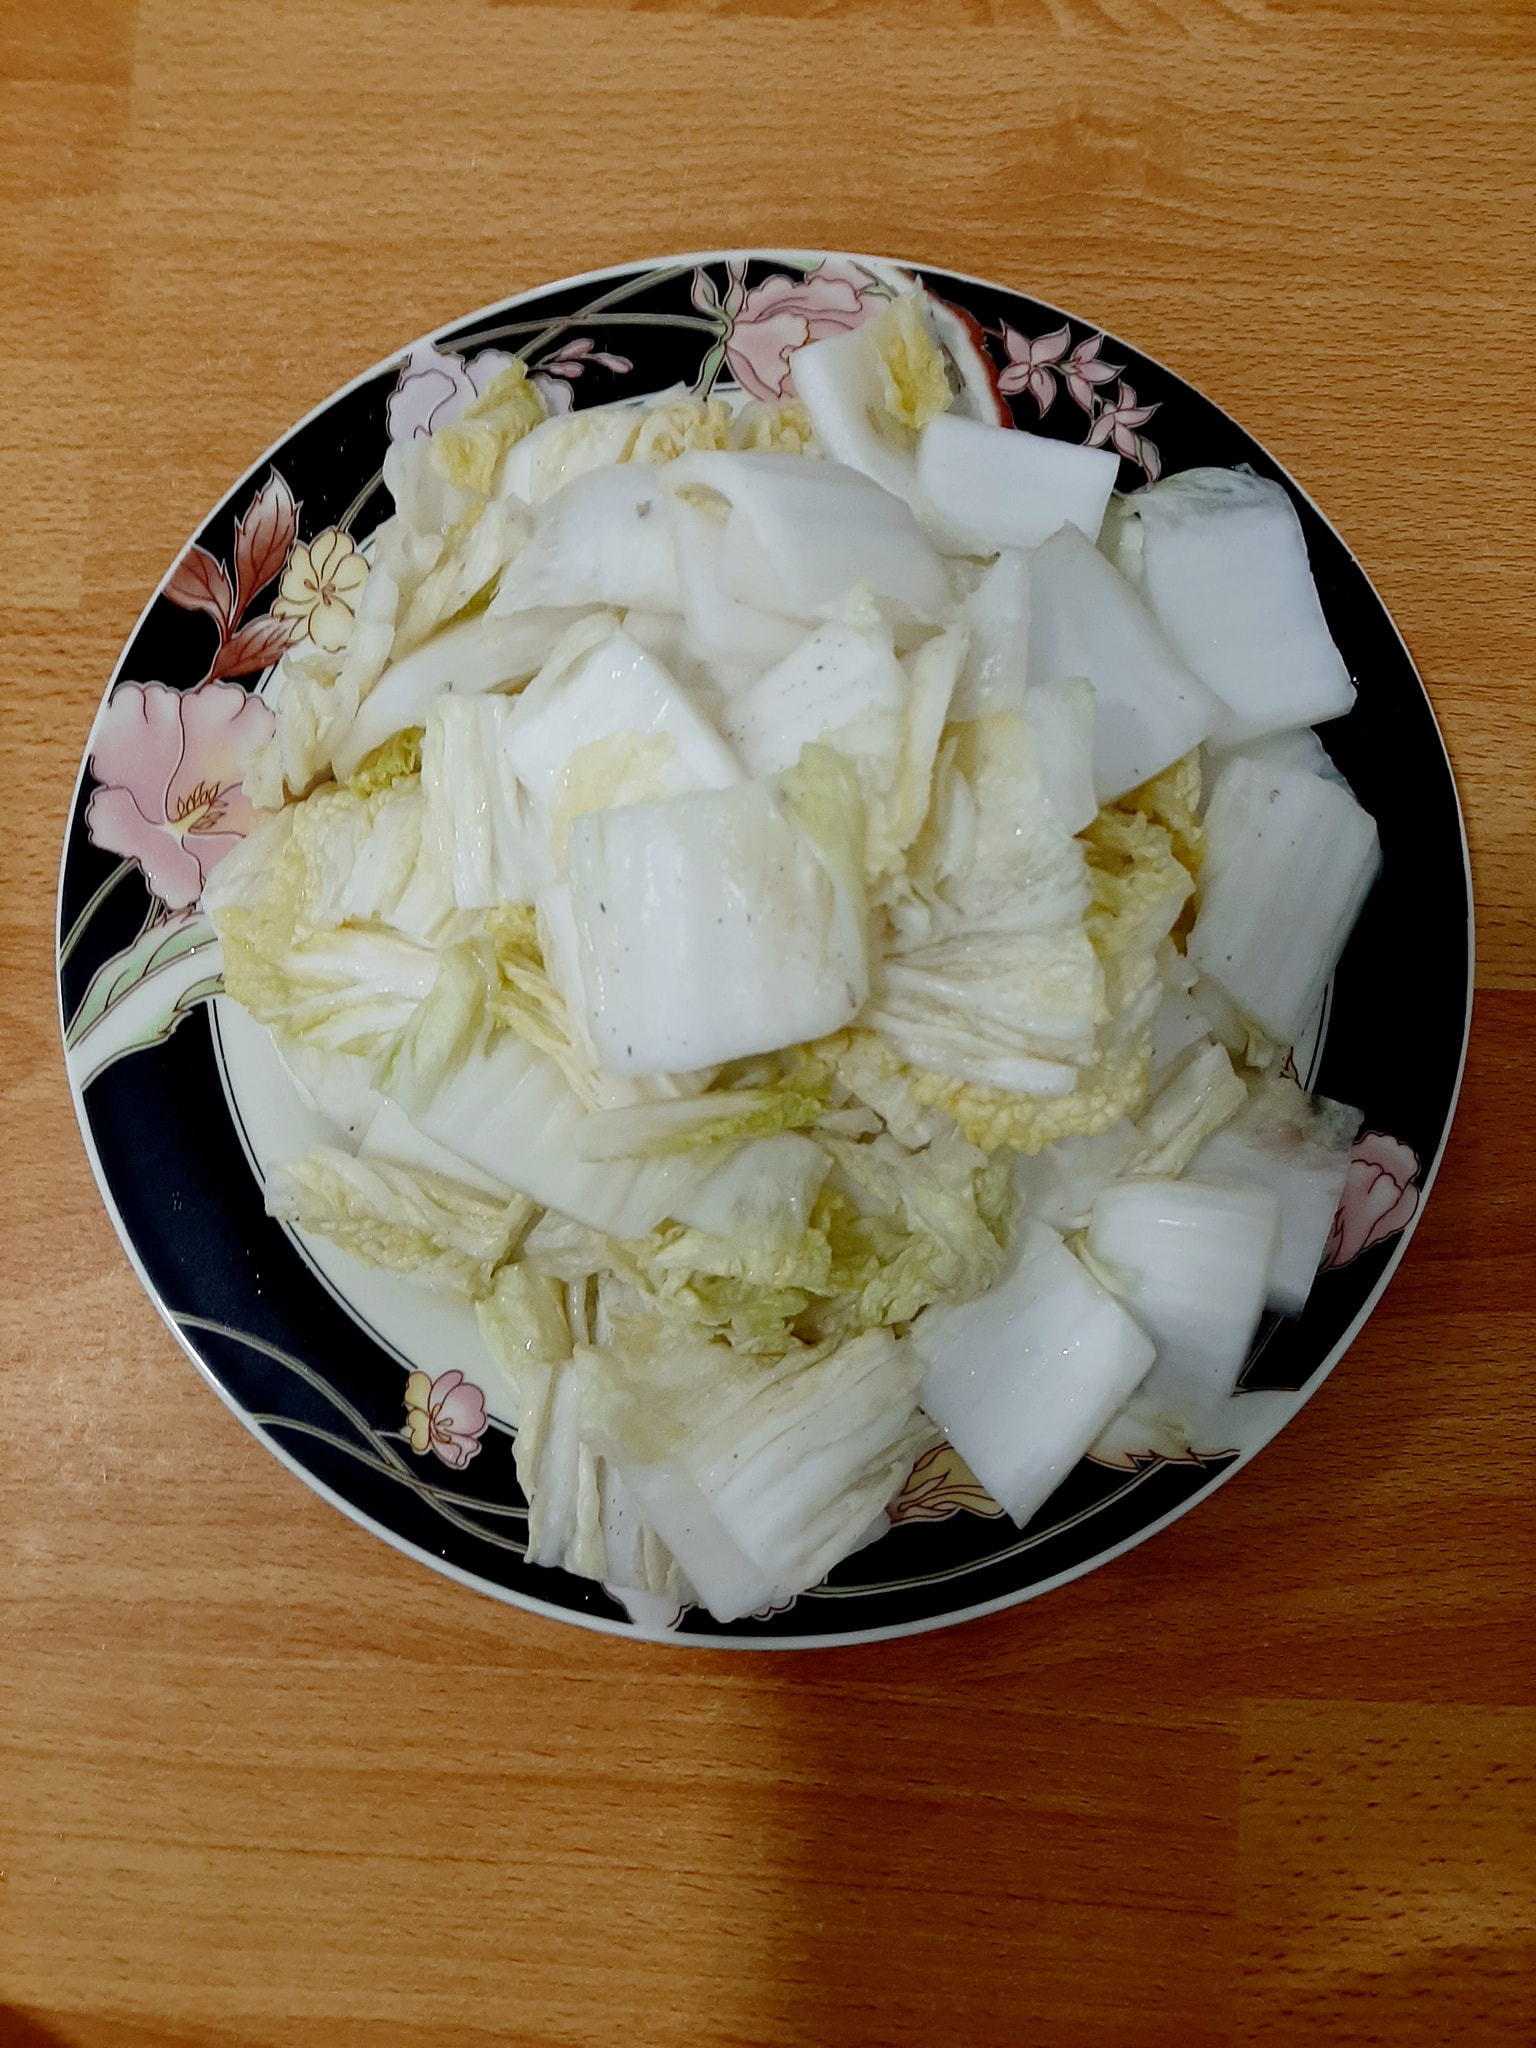 Resipi Kimchi Homemade Paling Mudah, Yang Penting Halal &#038; Sedap